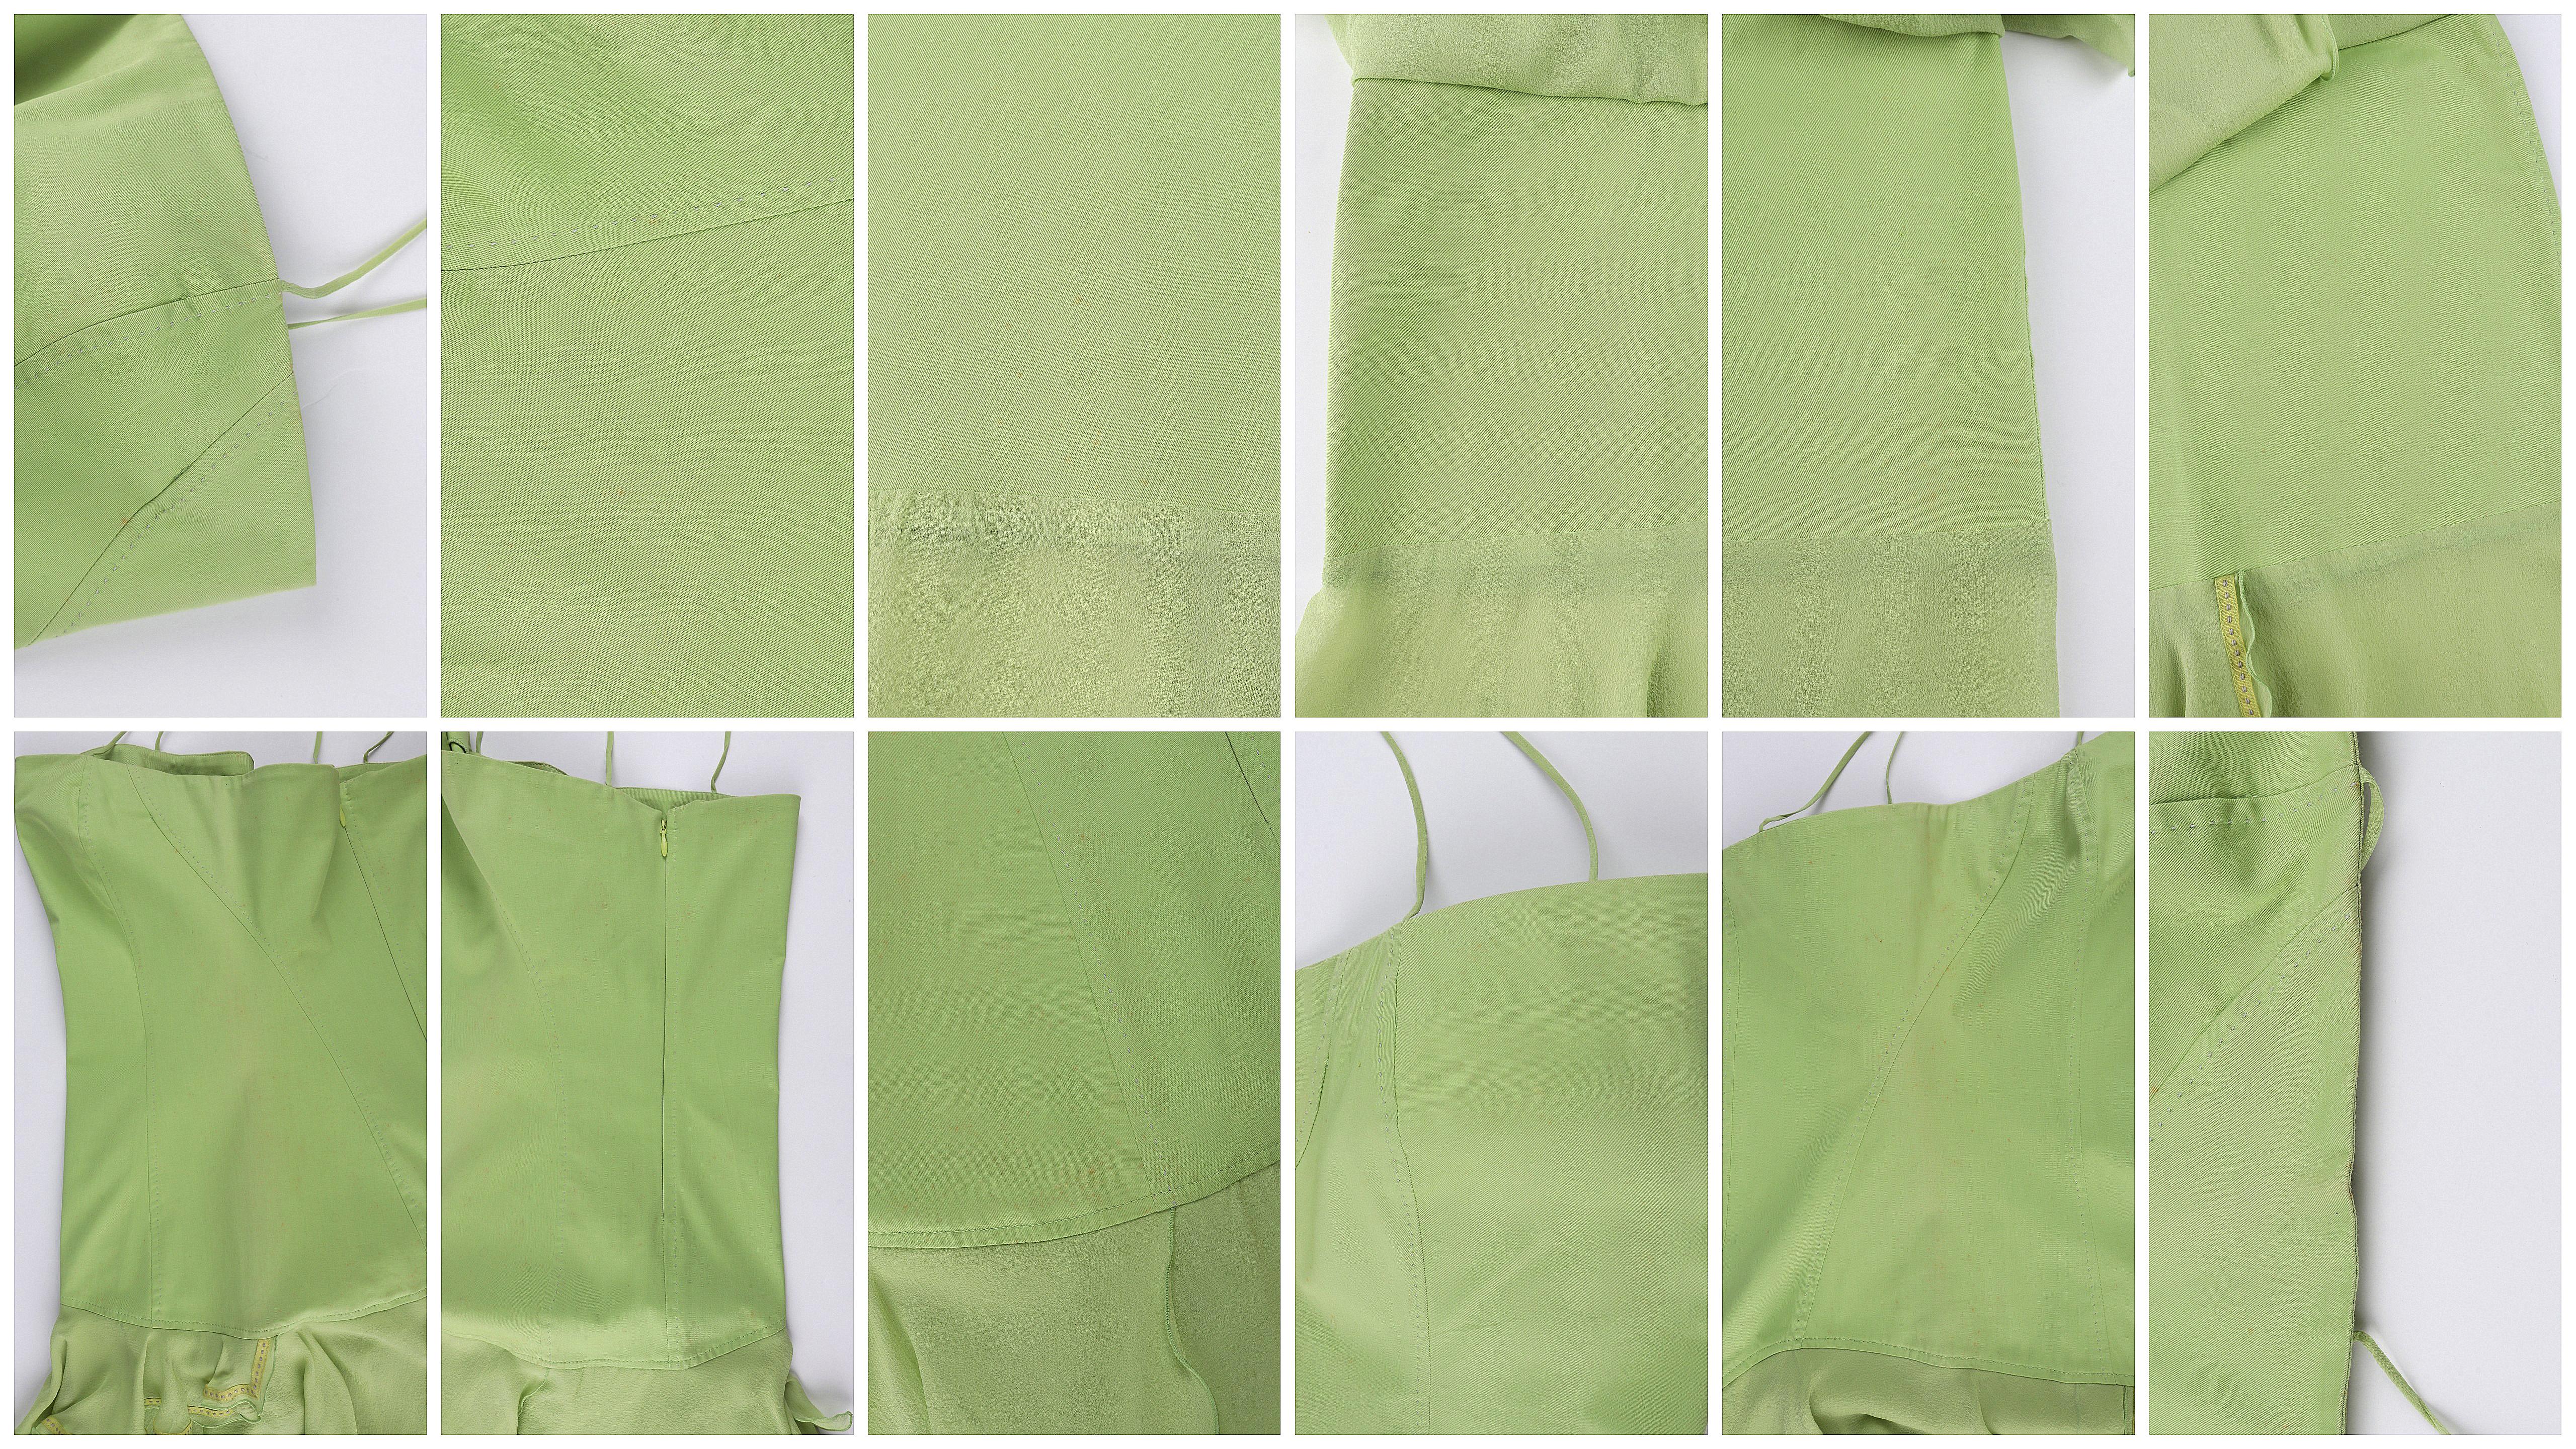 ALEXANDER McQUEEN S/S 1996 “The Hunger” Green Asymmetric Strapless Ruffle Dress For Sale 2